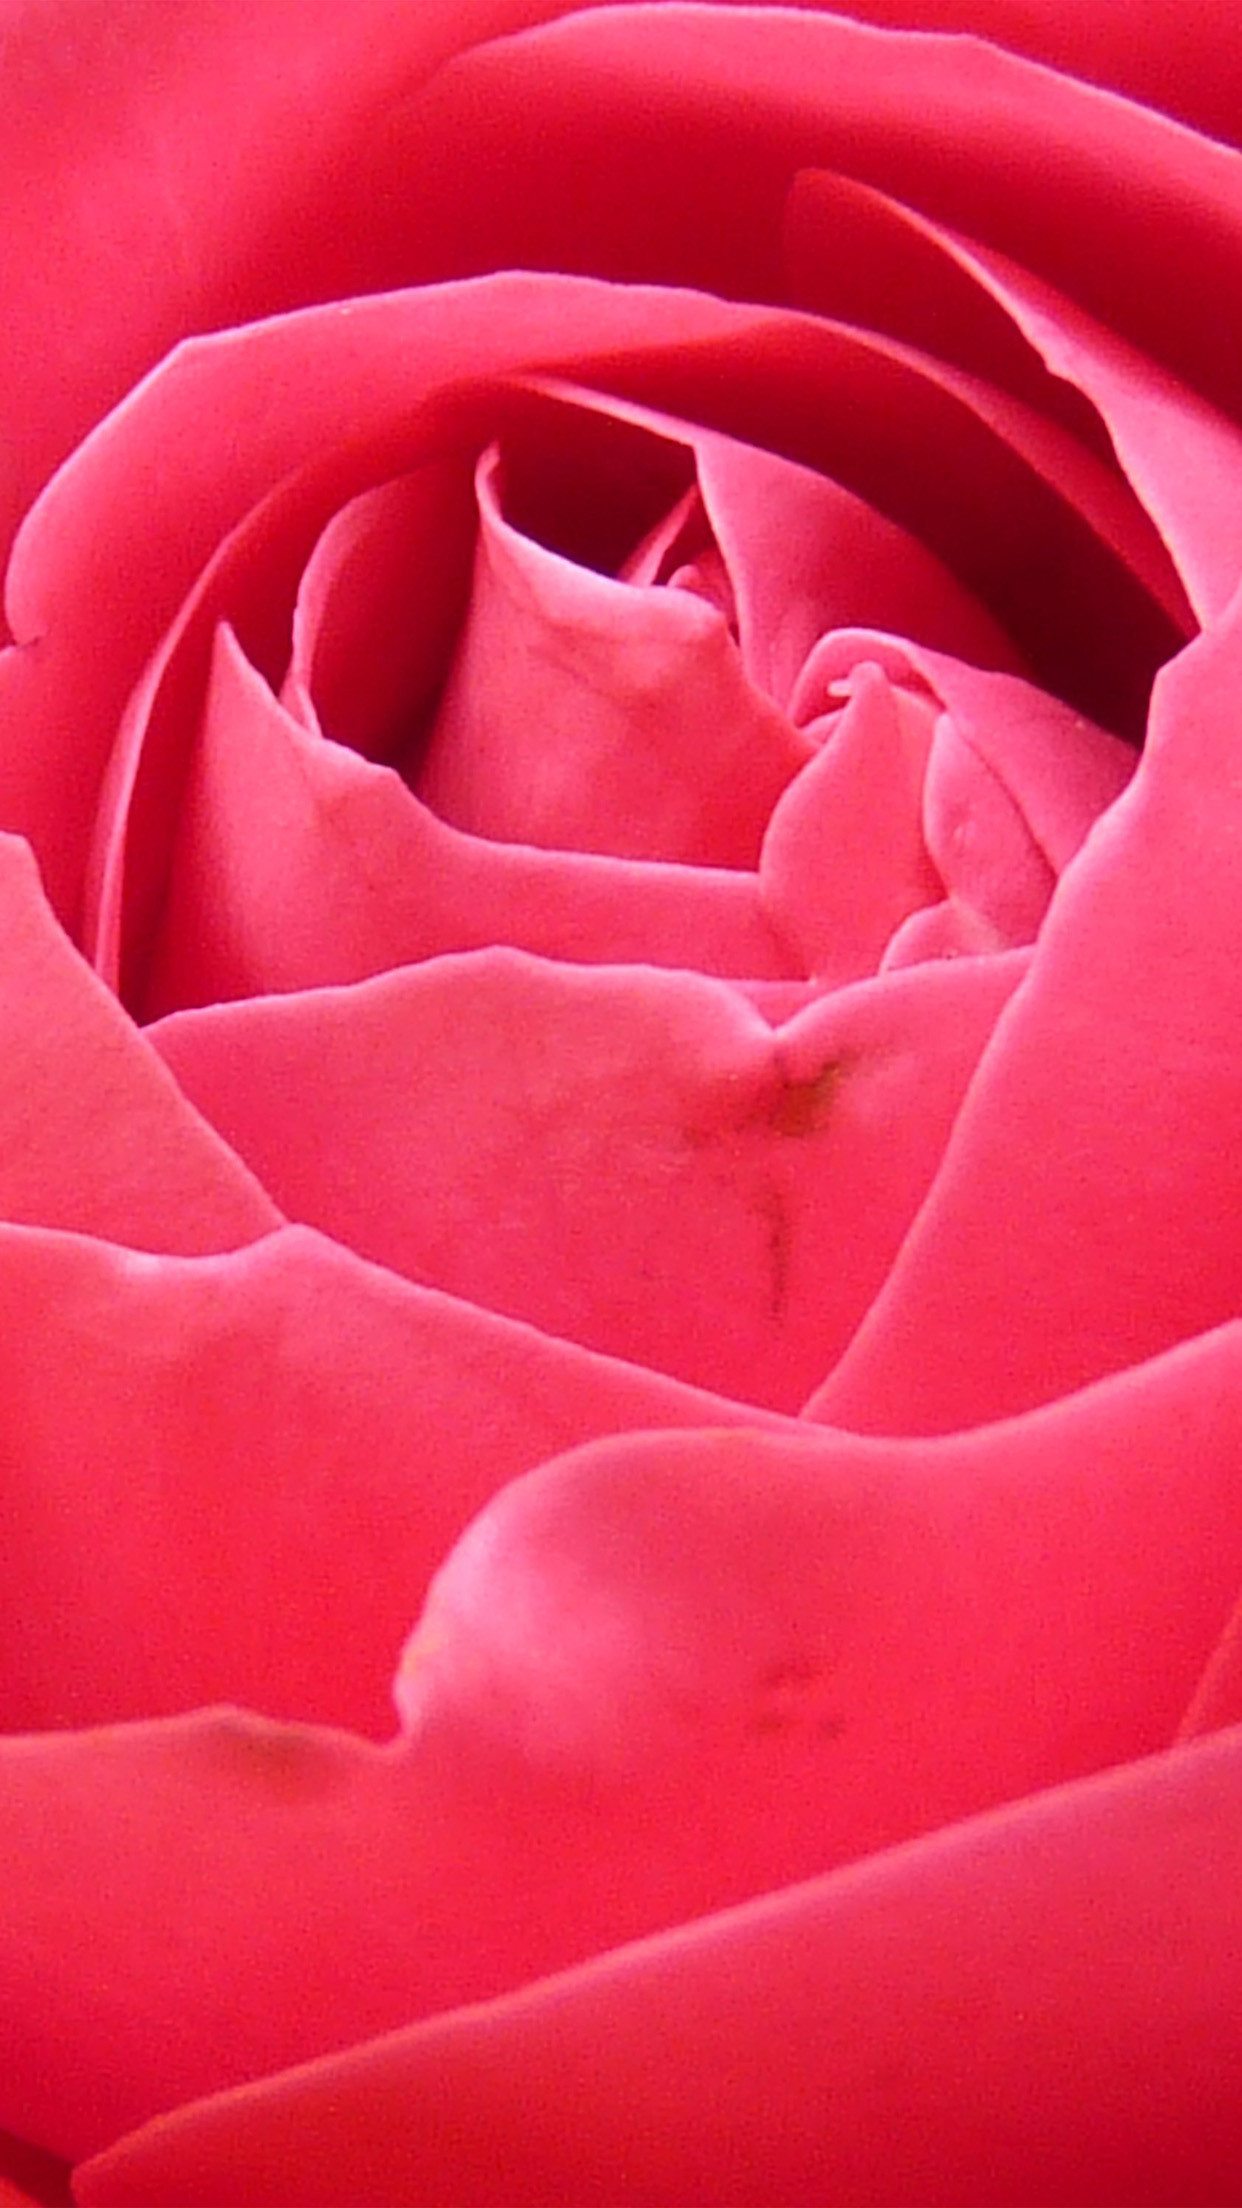 1242x2208 Pink Rose Petals Close Up Flowers iPhone 6+ HD Wallpaper ...